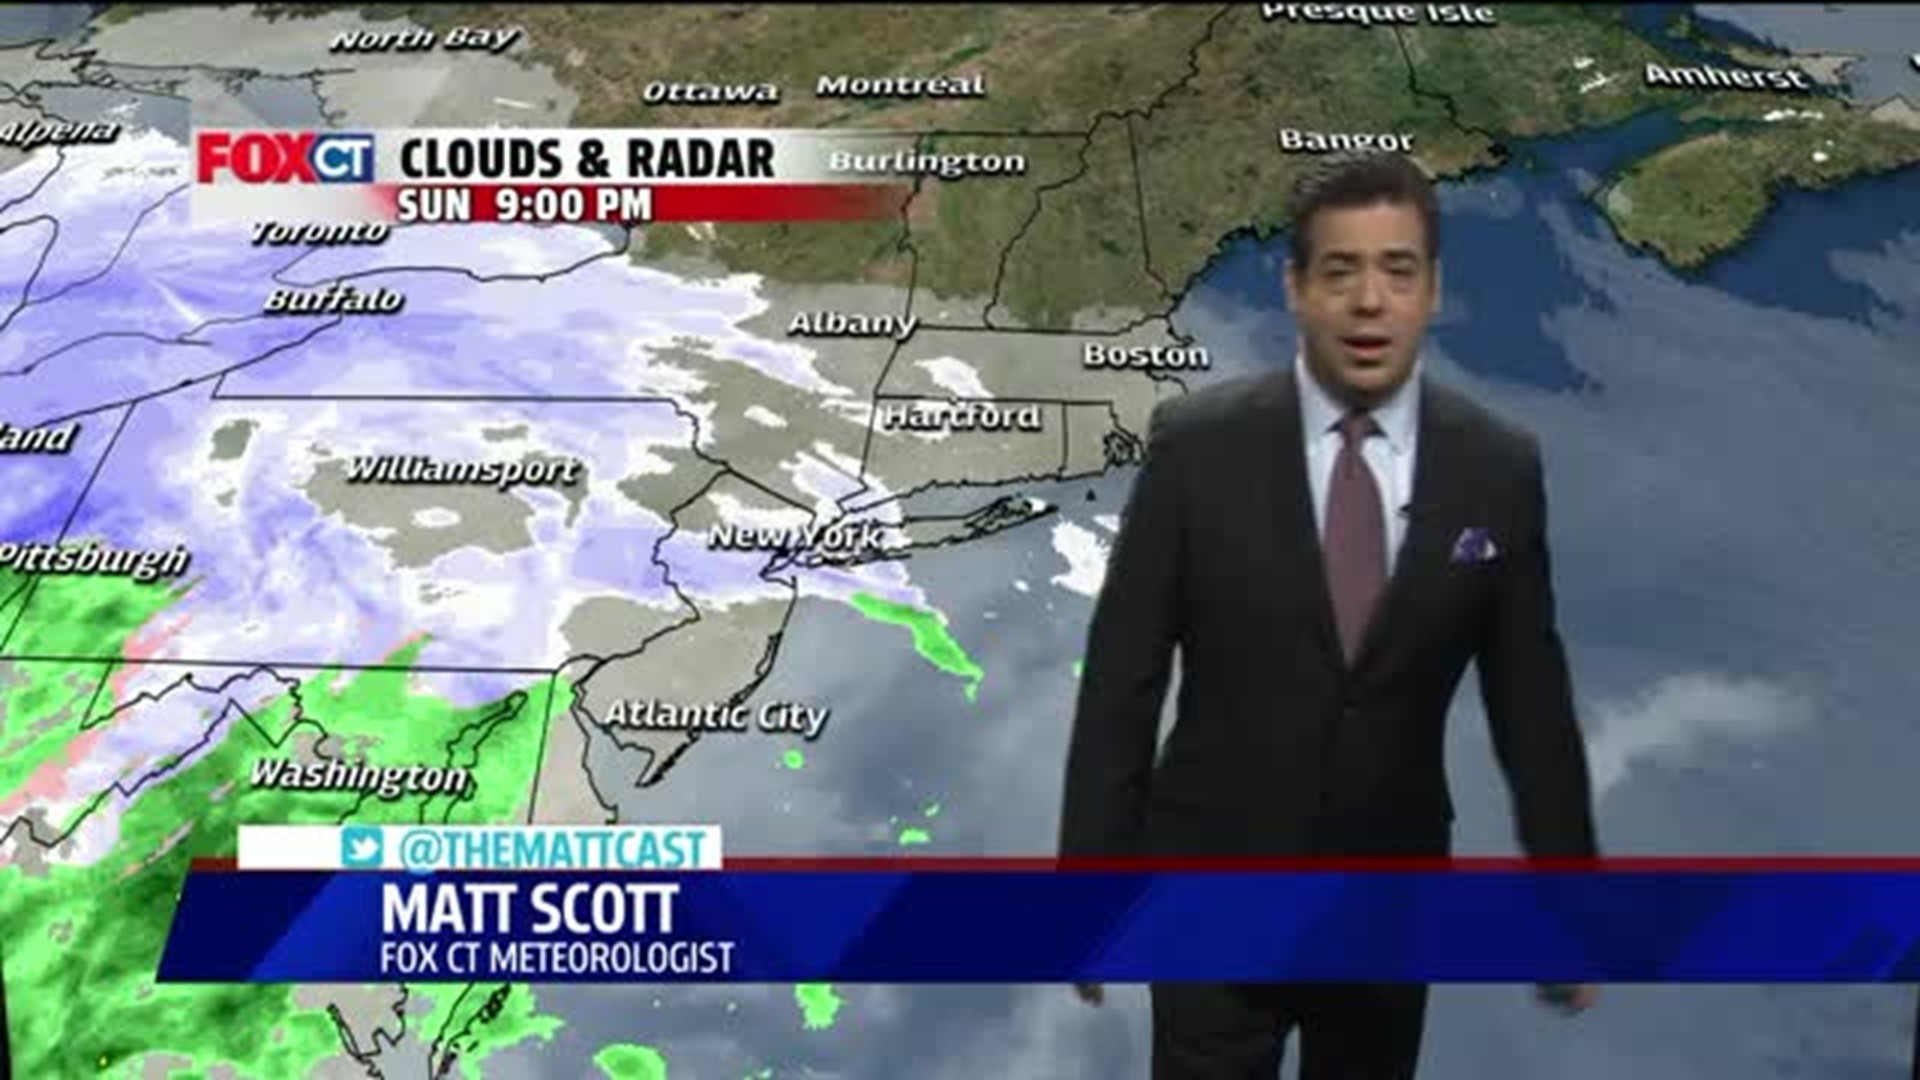 FOX CT Weather Watch: Winter storm late tonight